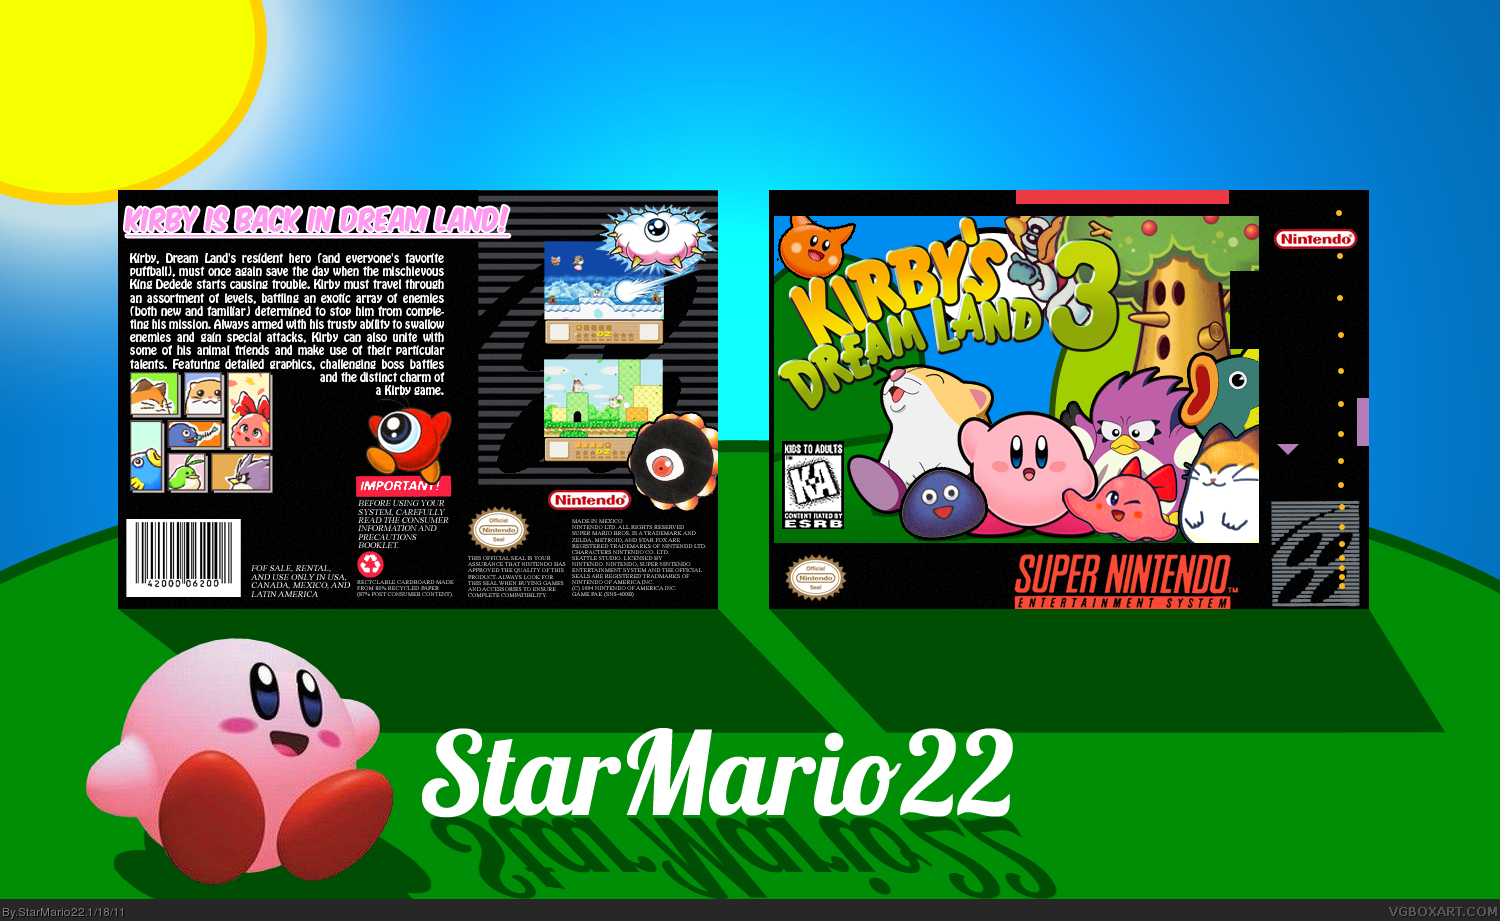 Kirby's Dream Land 3 box cover